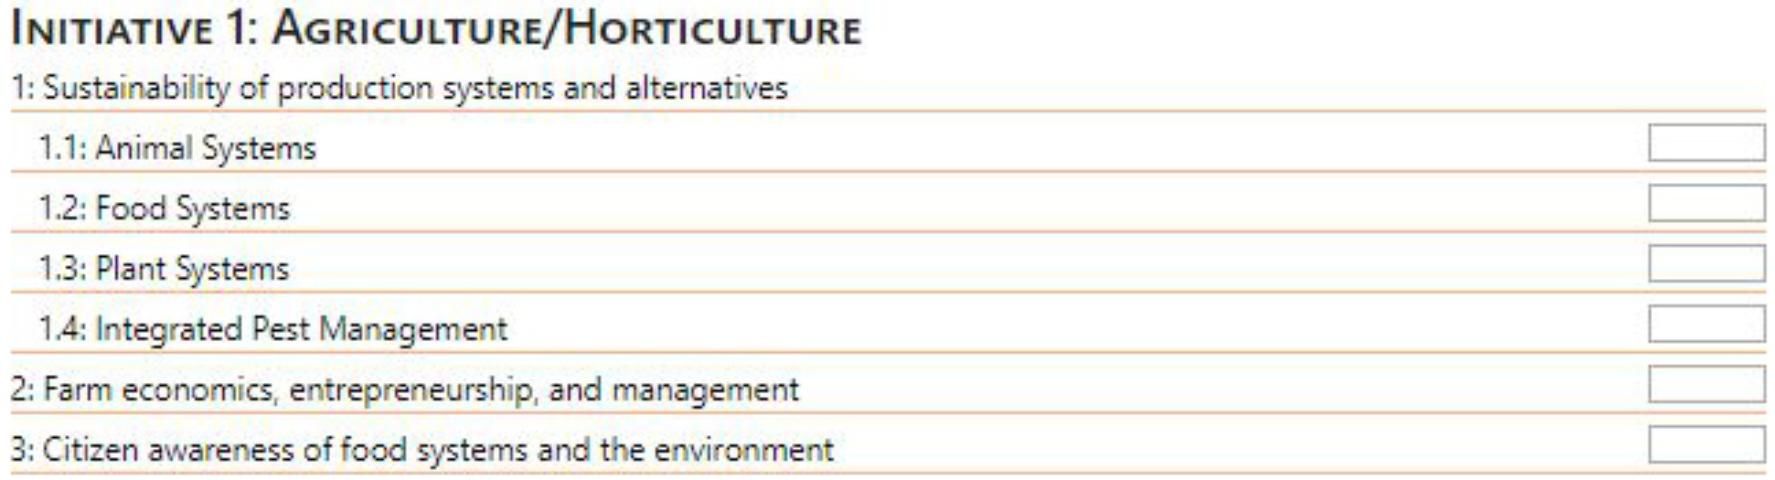 Figure 2. Screenshot of the Initiative 1 Program Categories section in Workload.